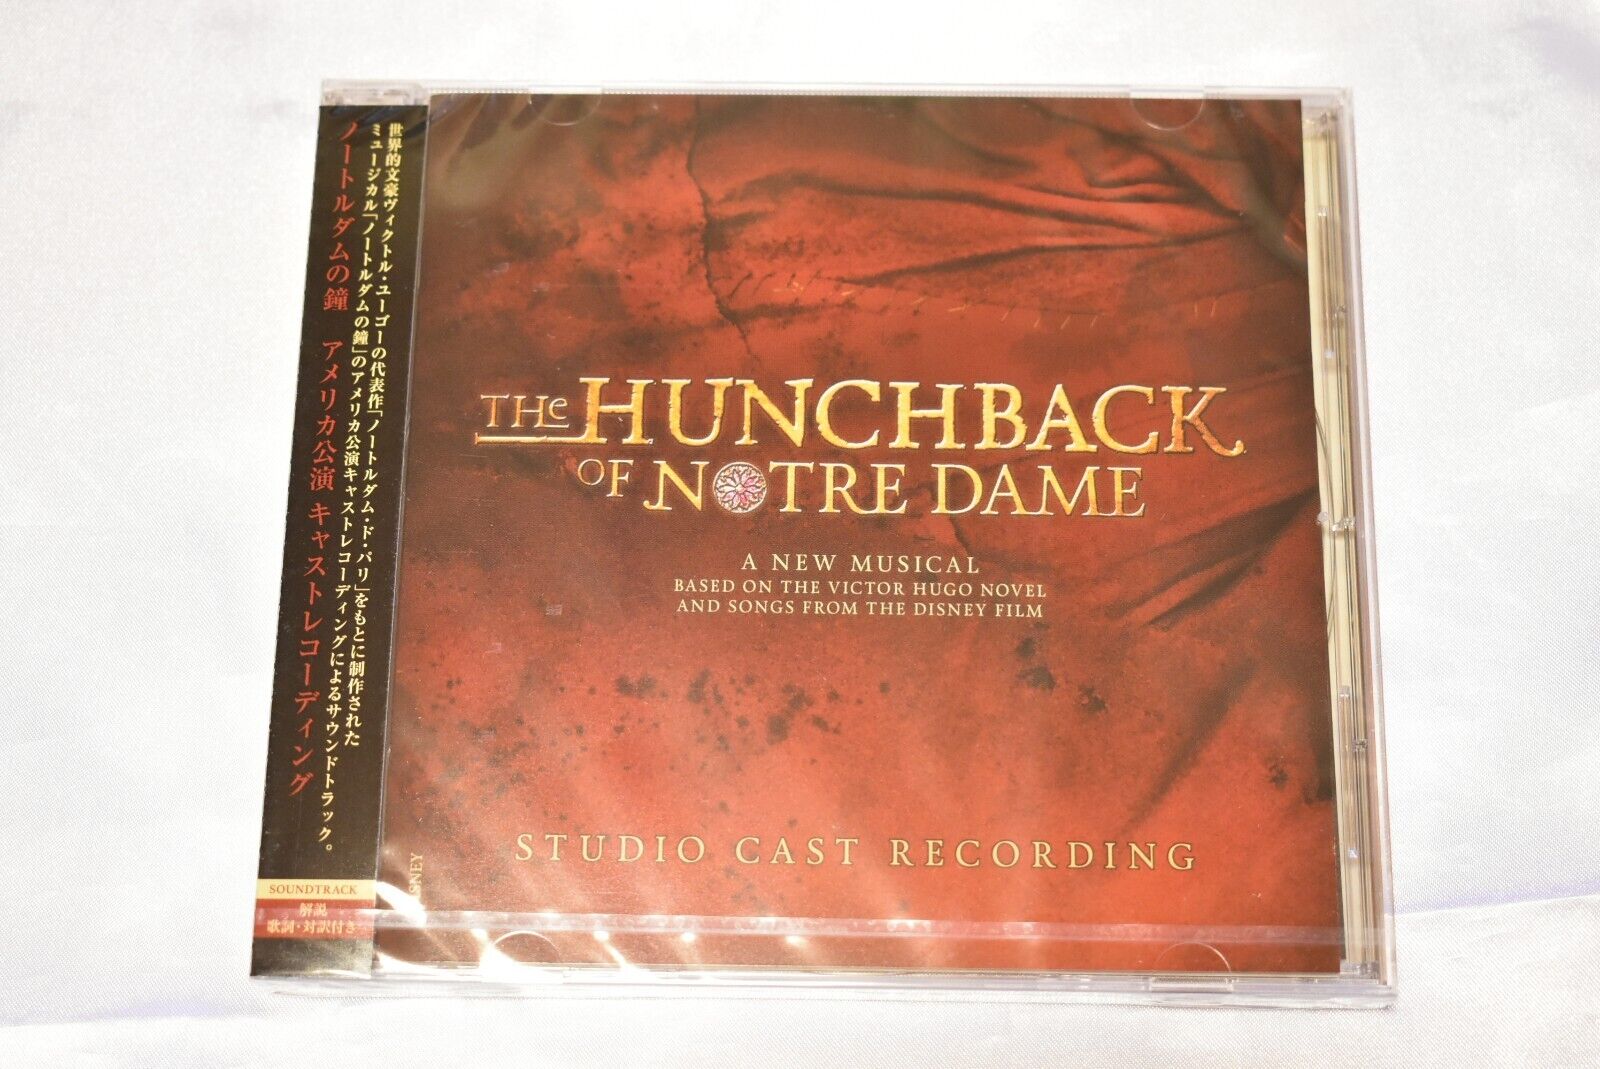 Alan Menken - The Hunchback of Notre Dame [Studio Cast Recording] - JAPAN CD